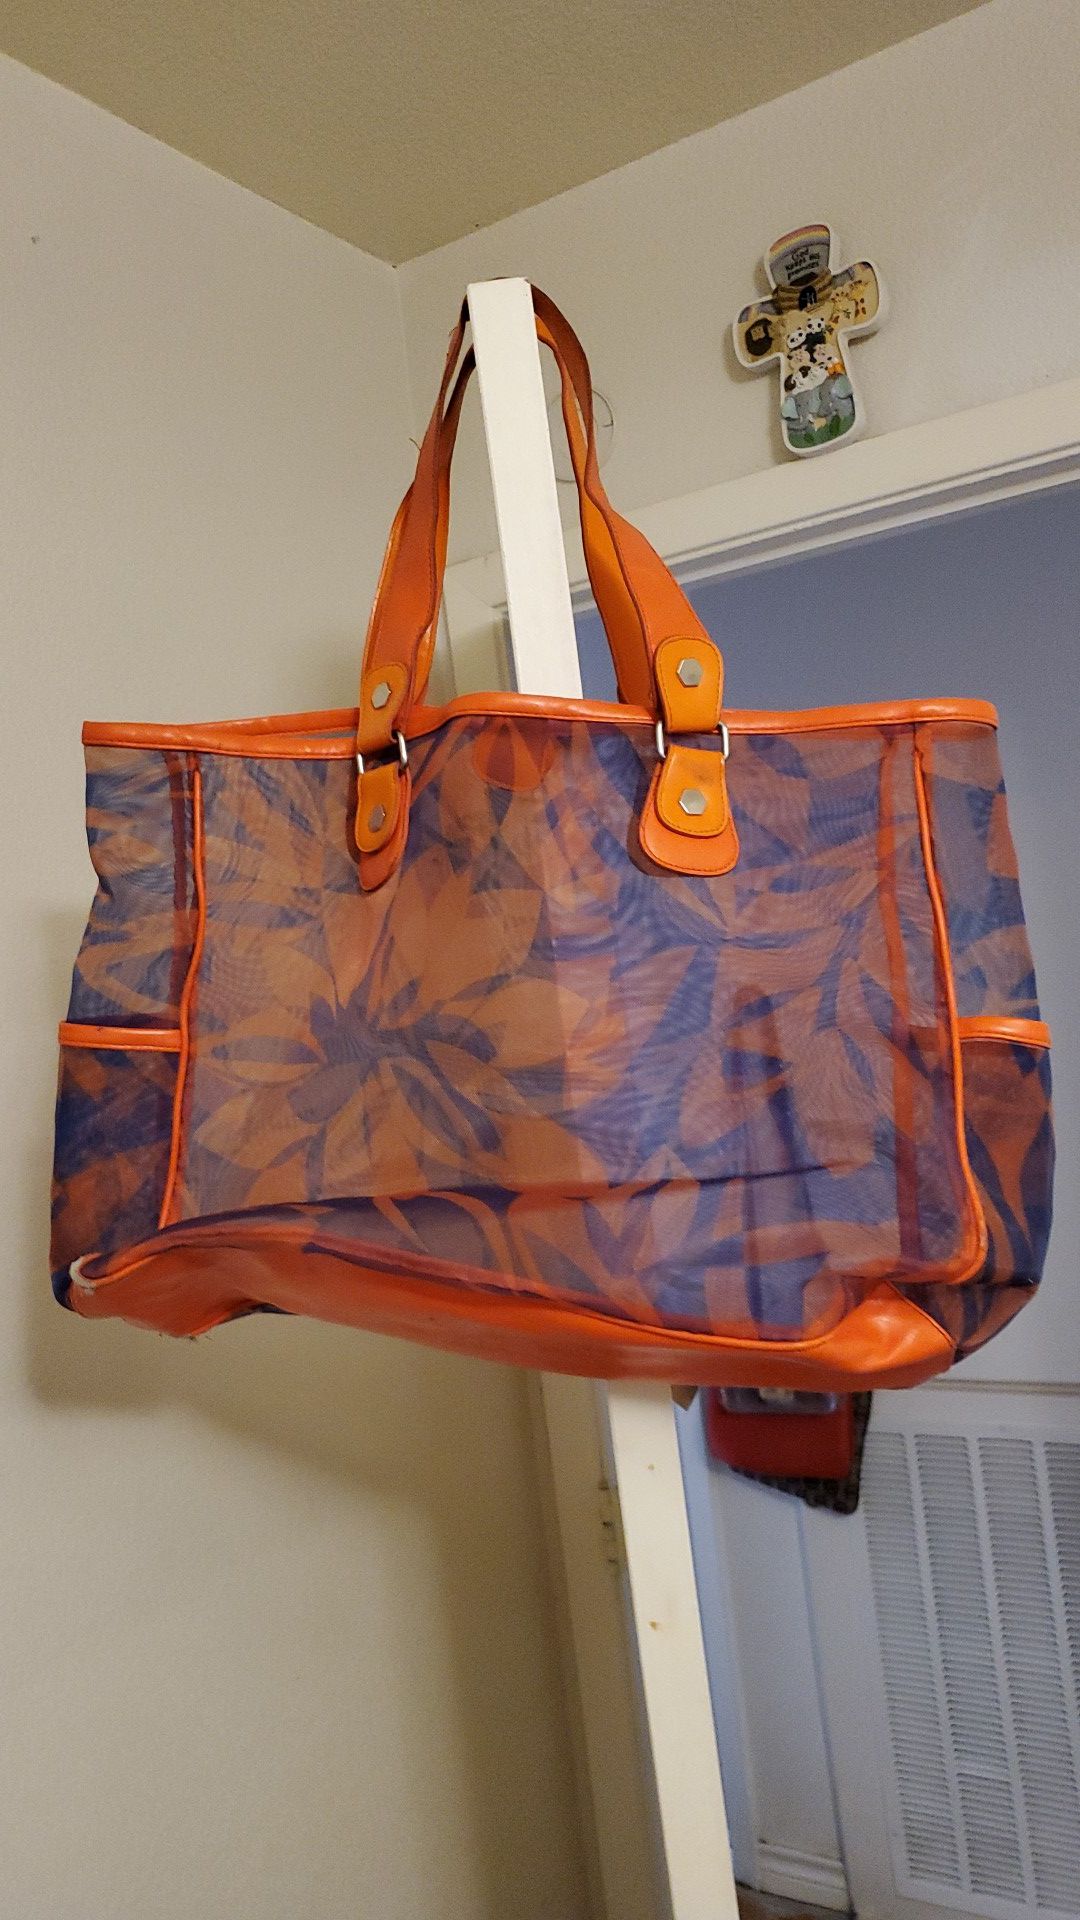 Large orange and blue bag